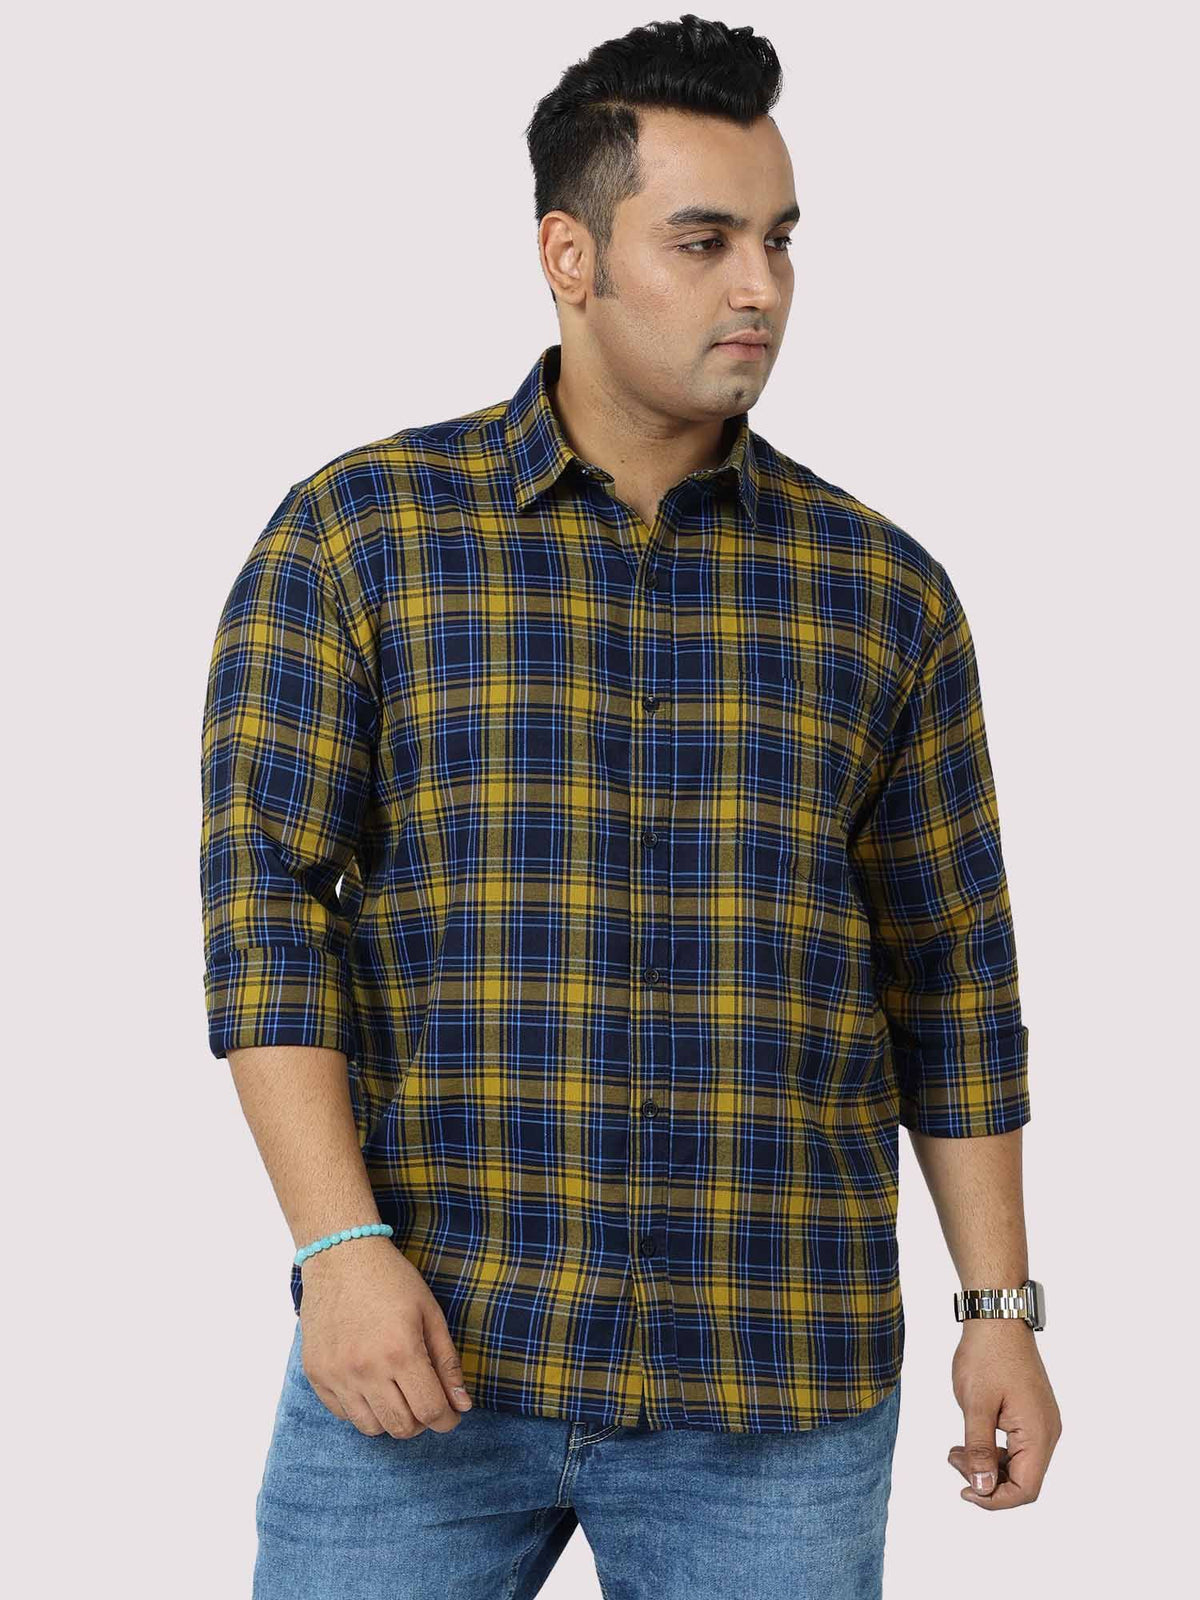 Yellow and Navy Blue Checkered Full Shirt Men's Plus Size - Guniaa Fashions